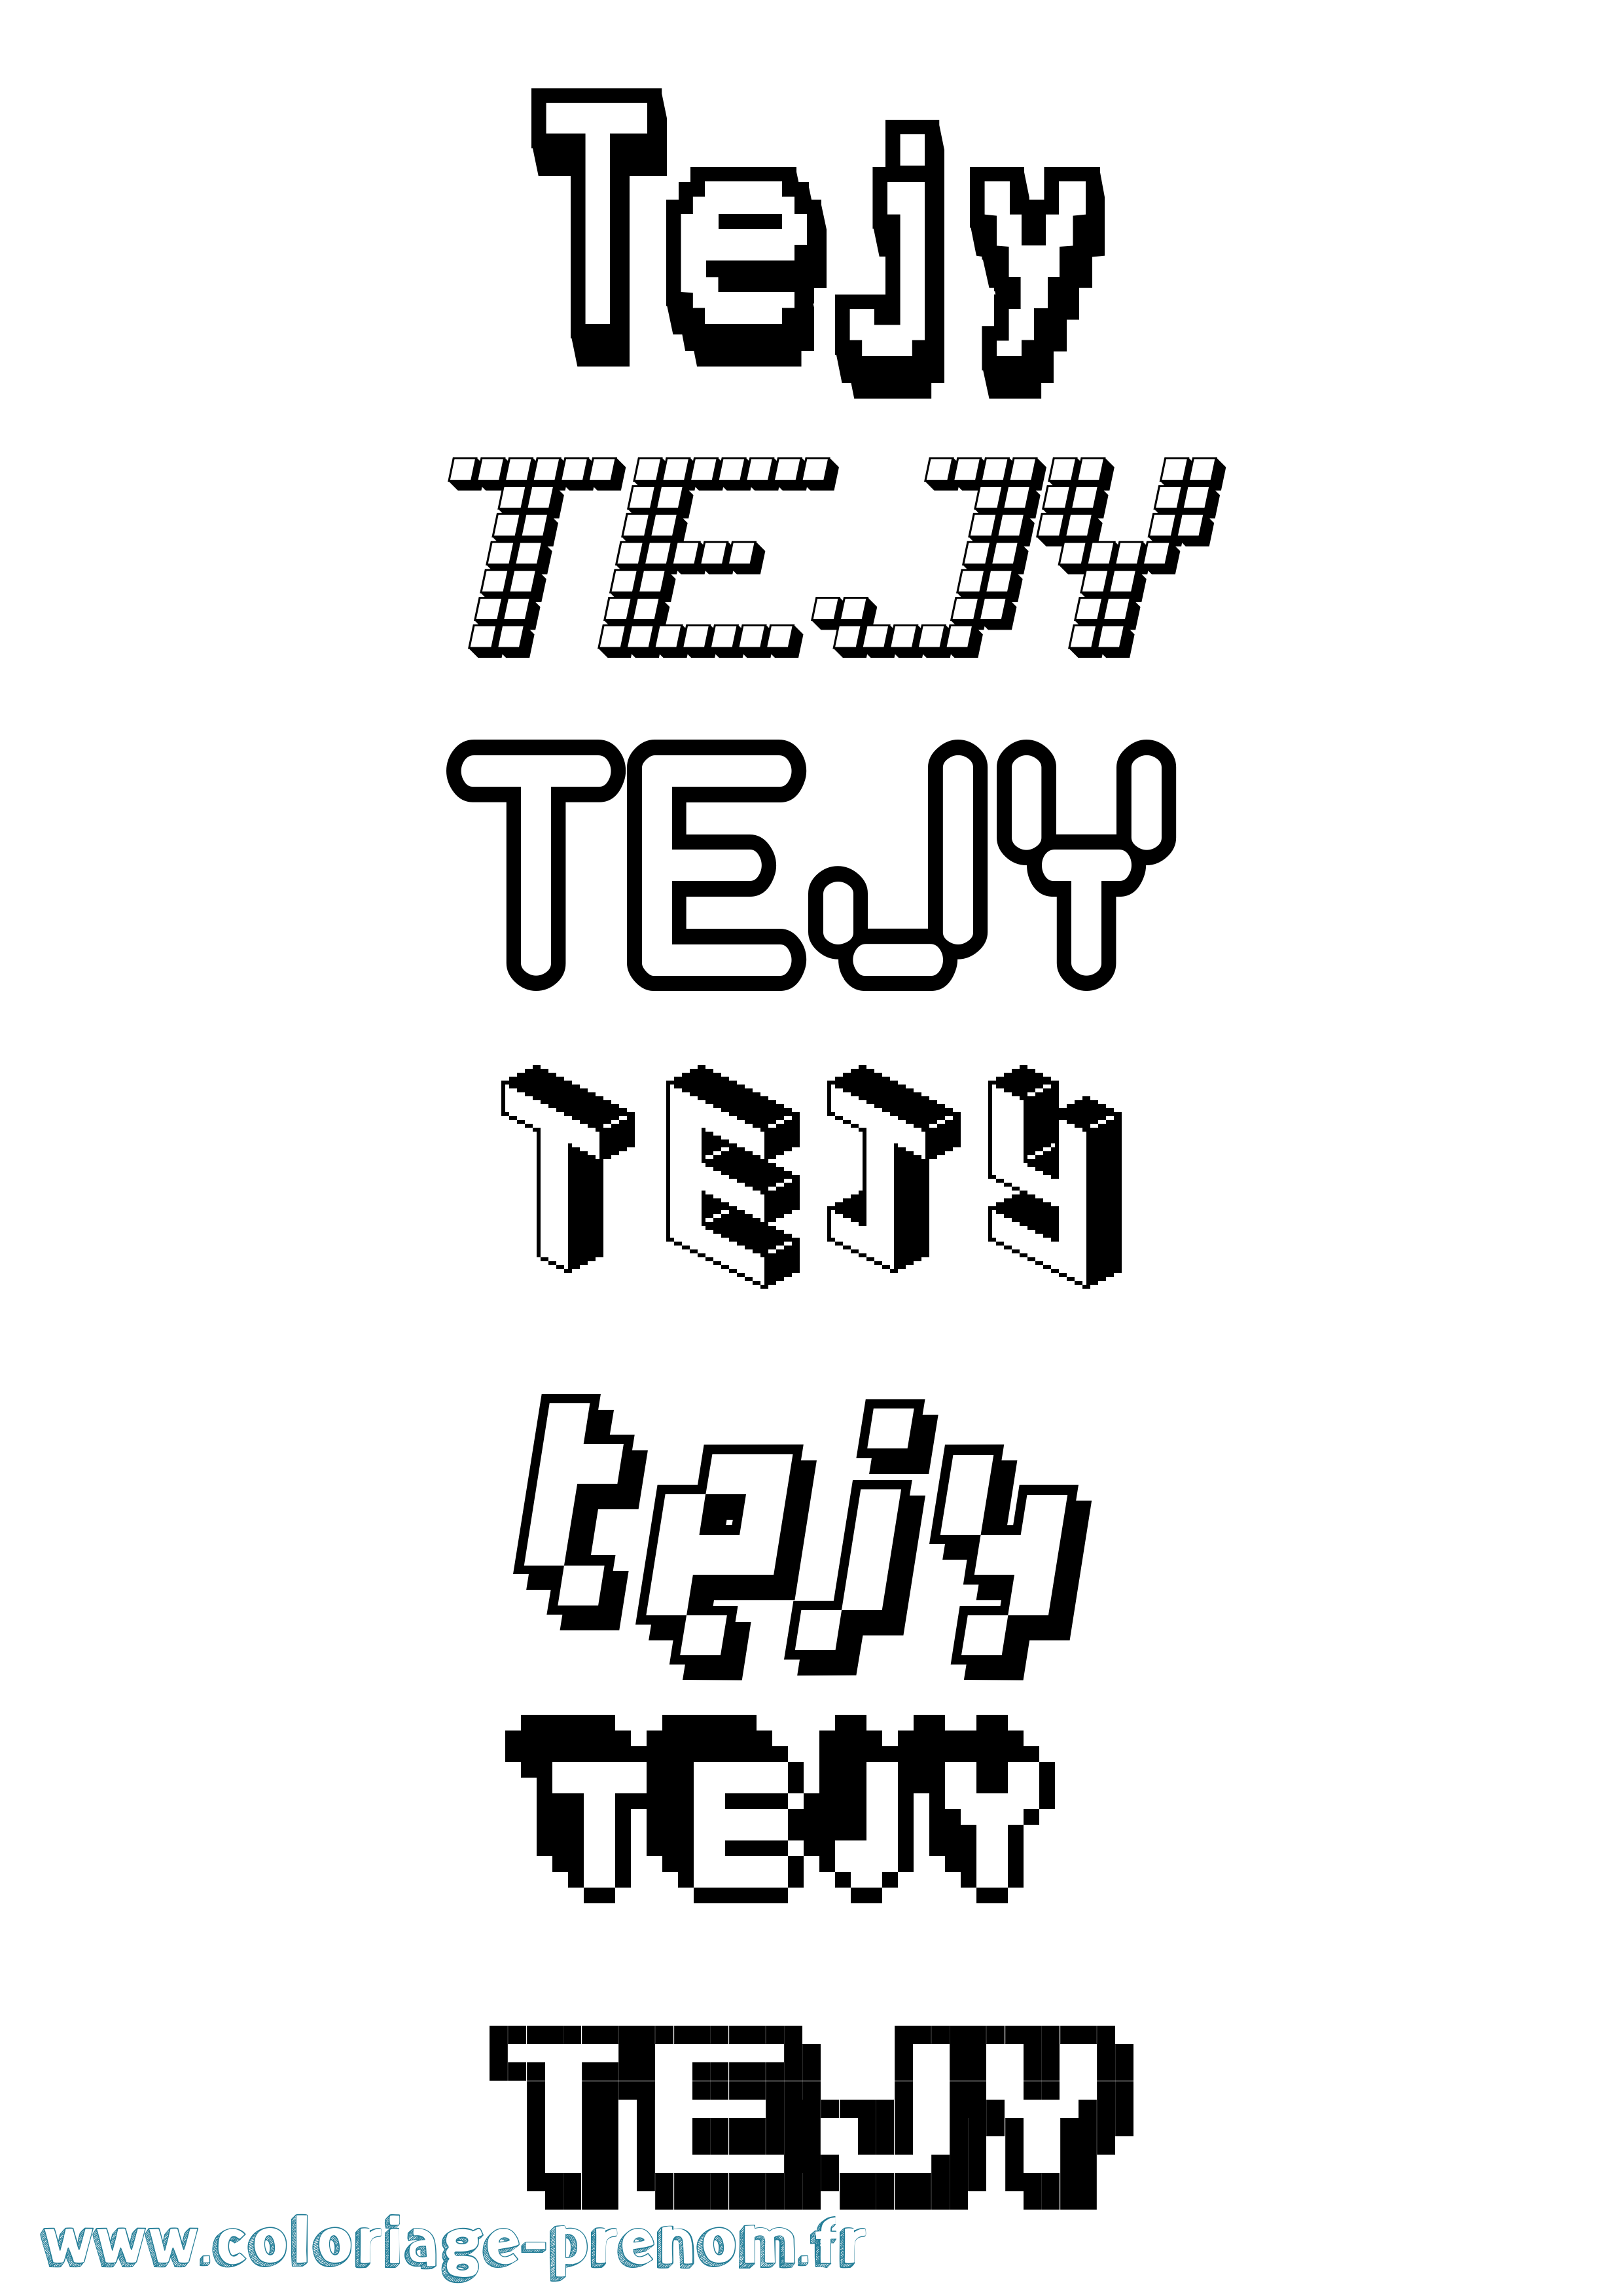 Coloriage prénom Tejy Pixel